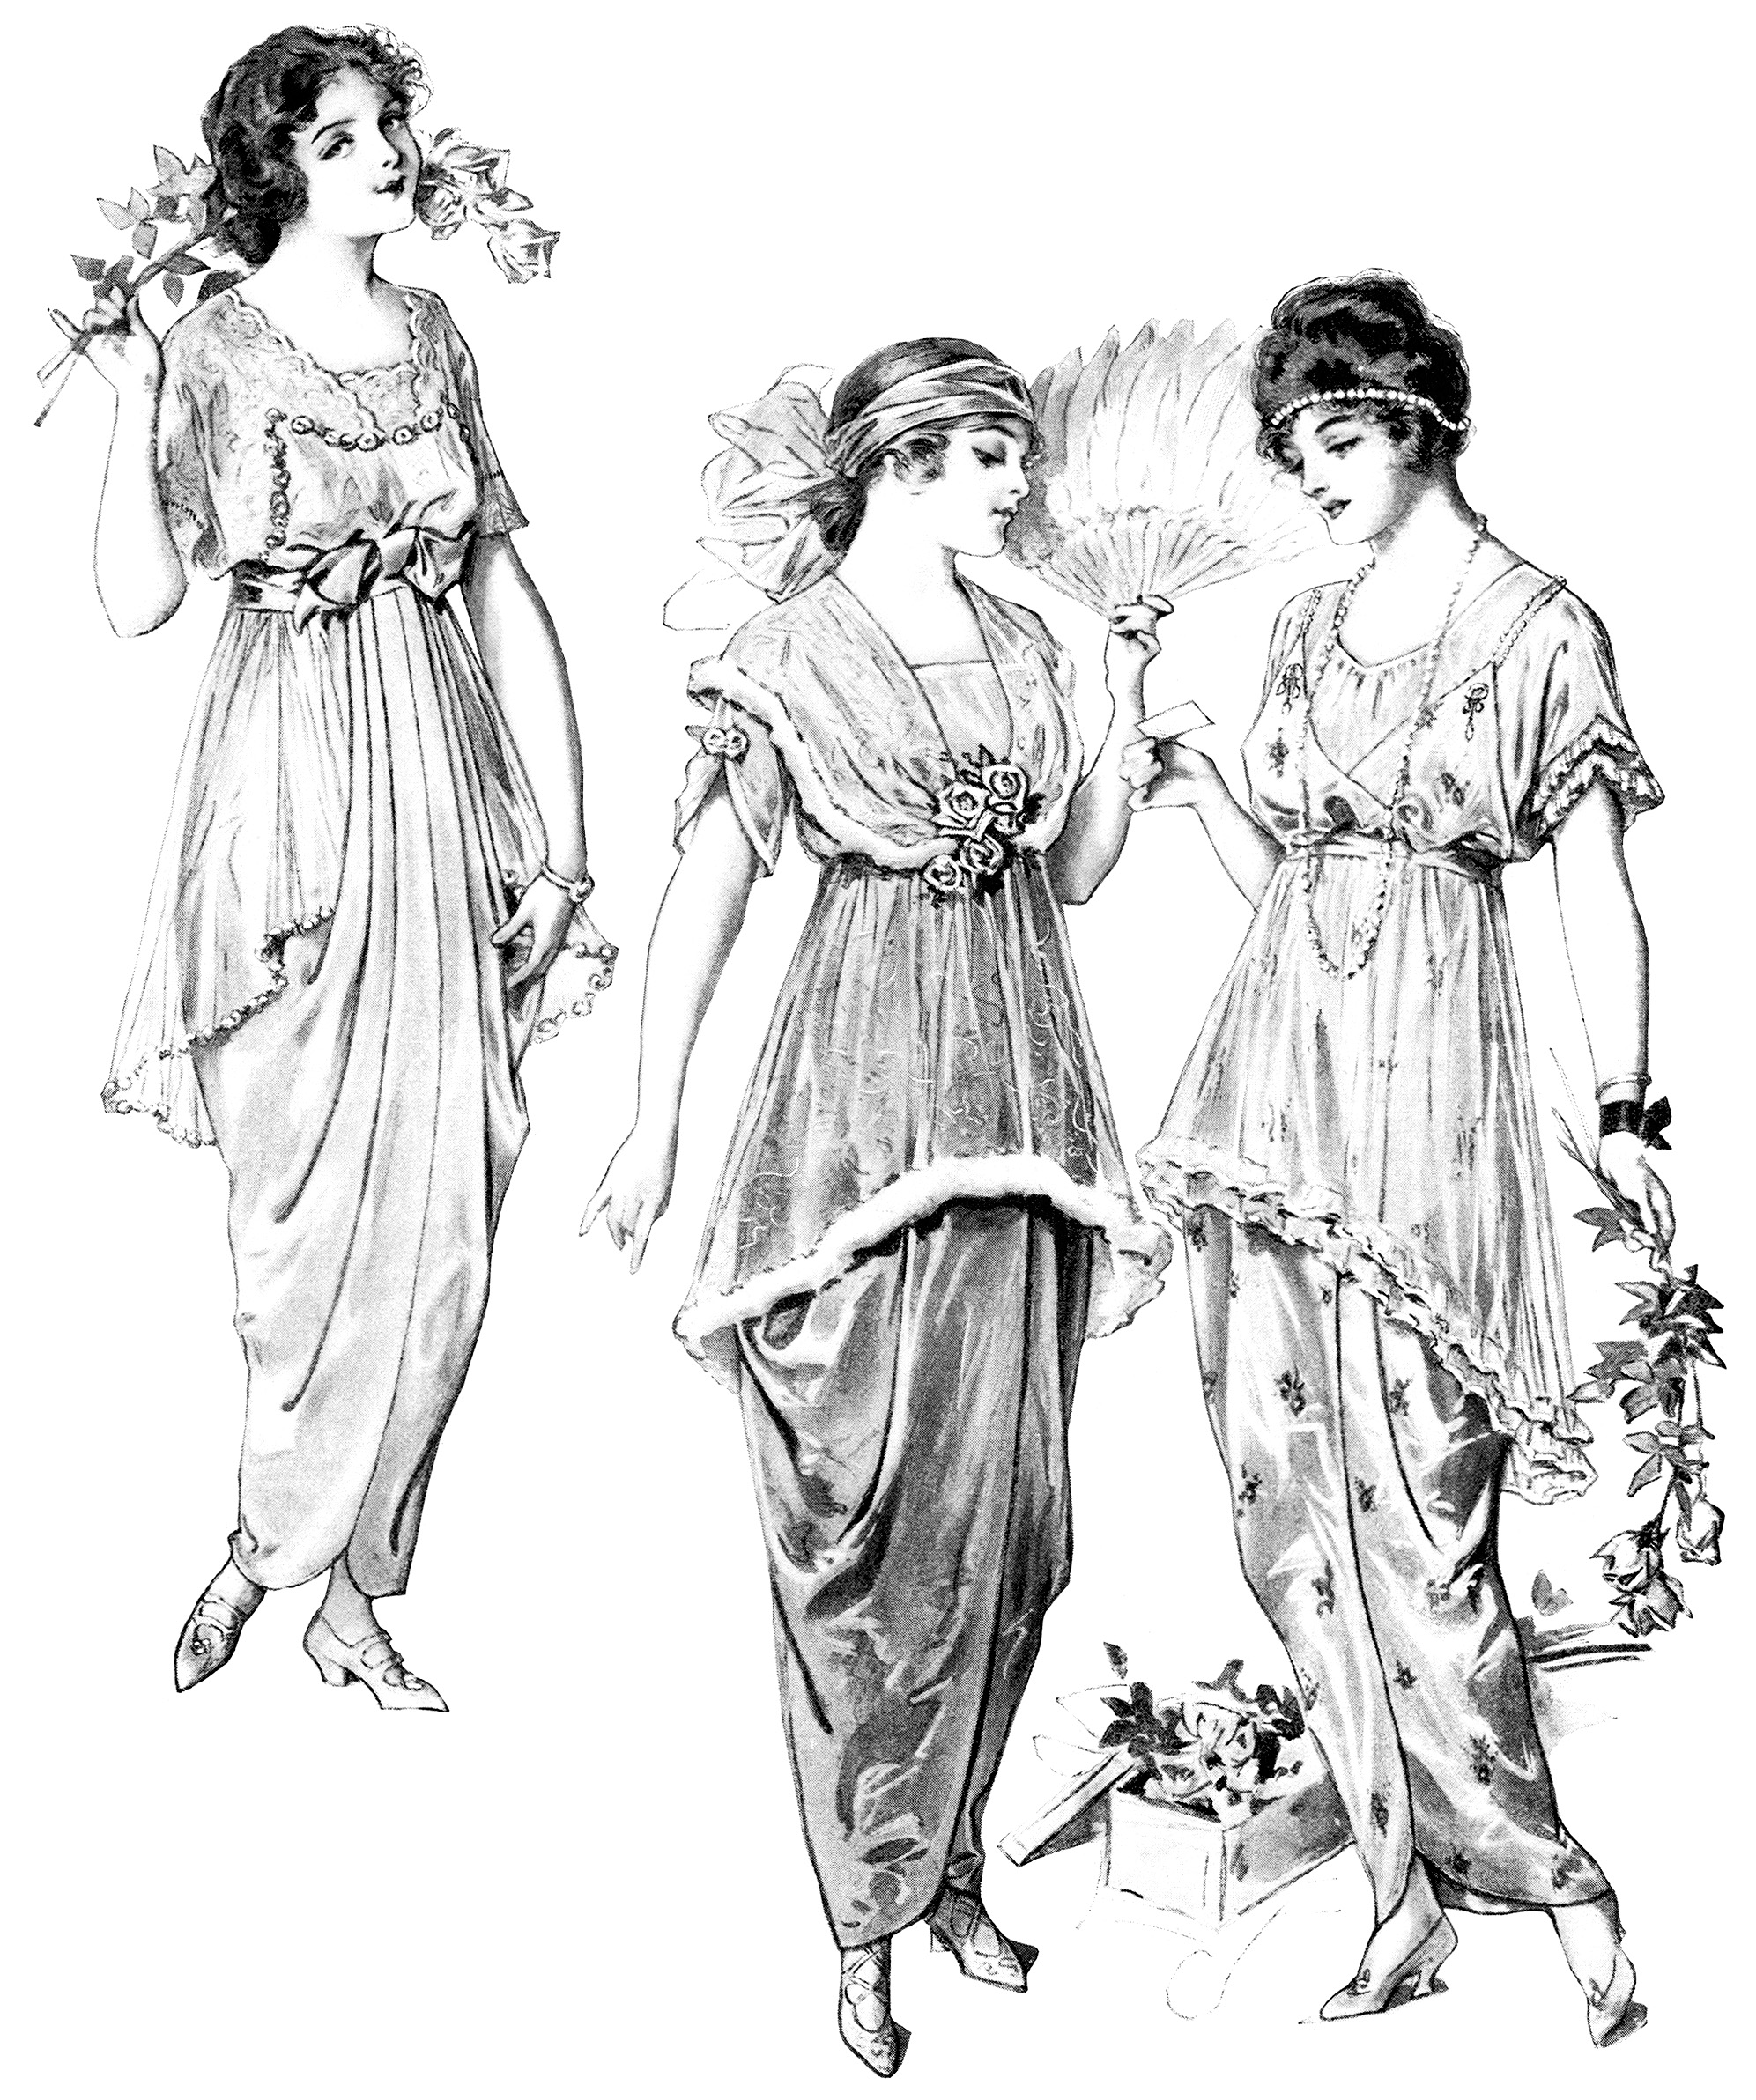 vintage fashion clip art, Edwardian clothing illustration, fashion for teens 1914, antique fashion printable graphics, black and white clipart, junk journal printable